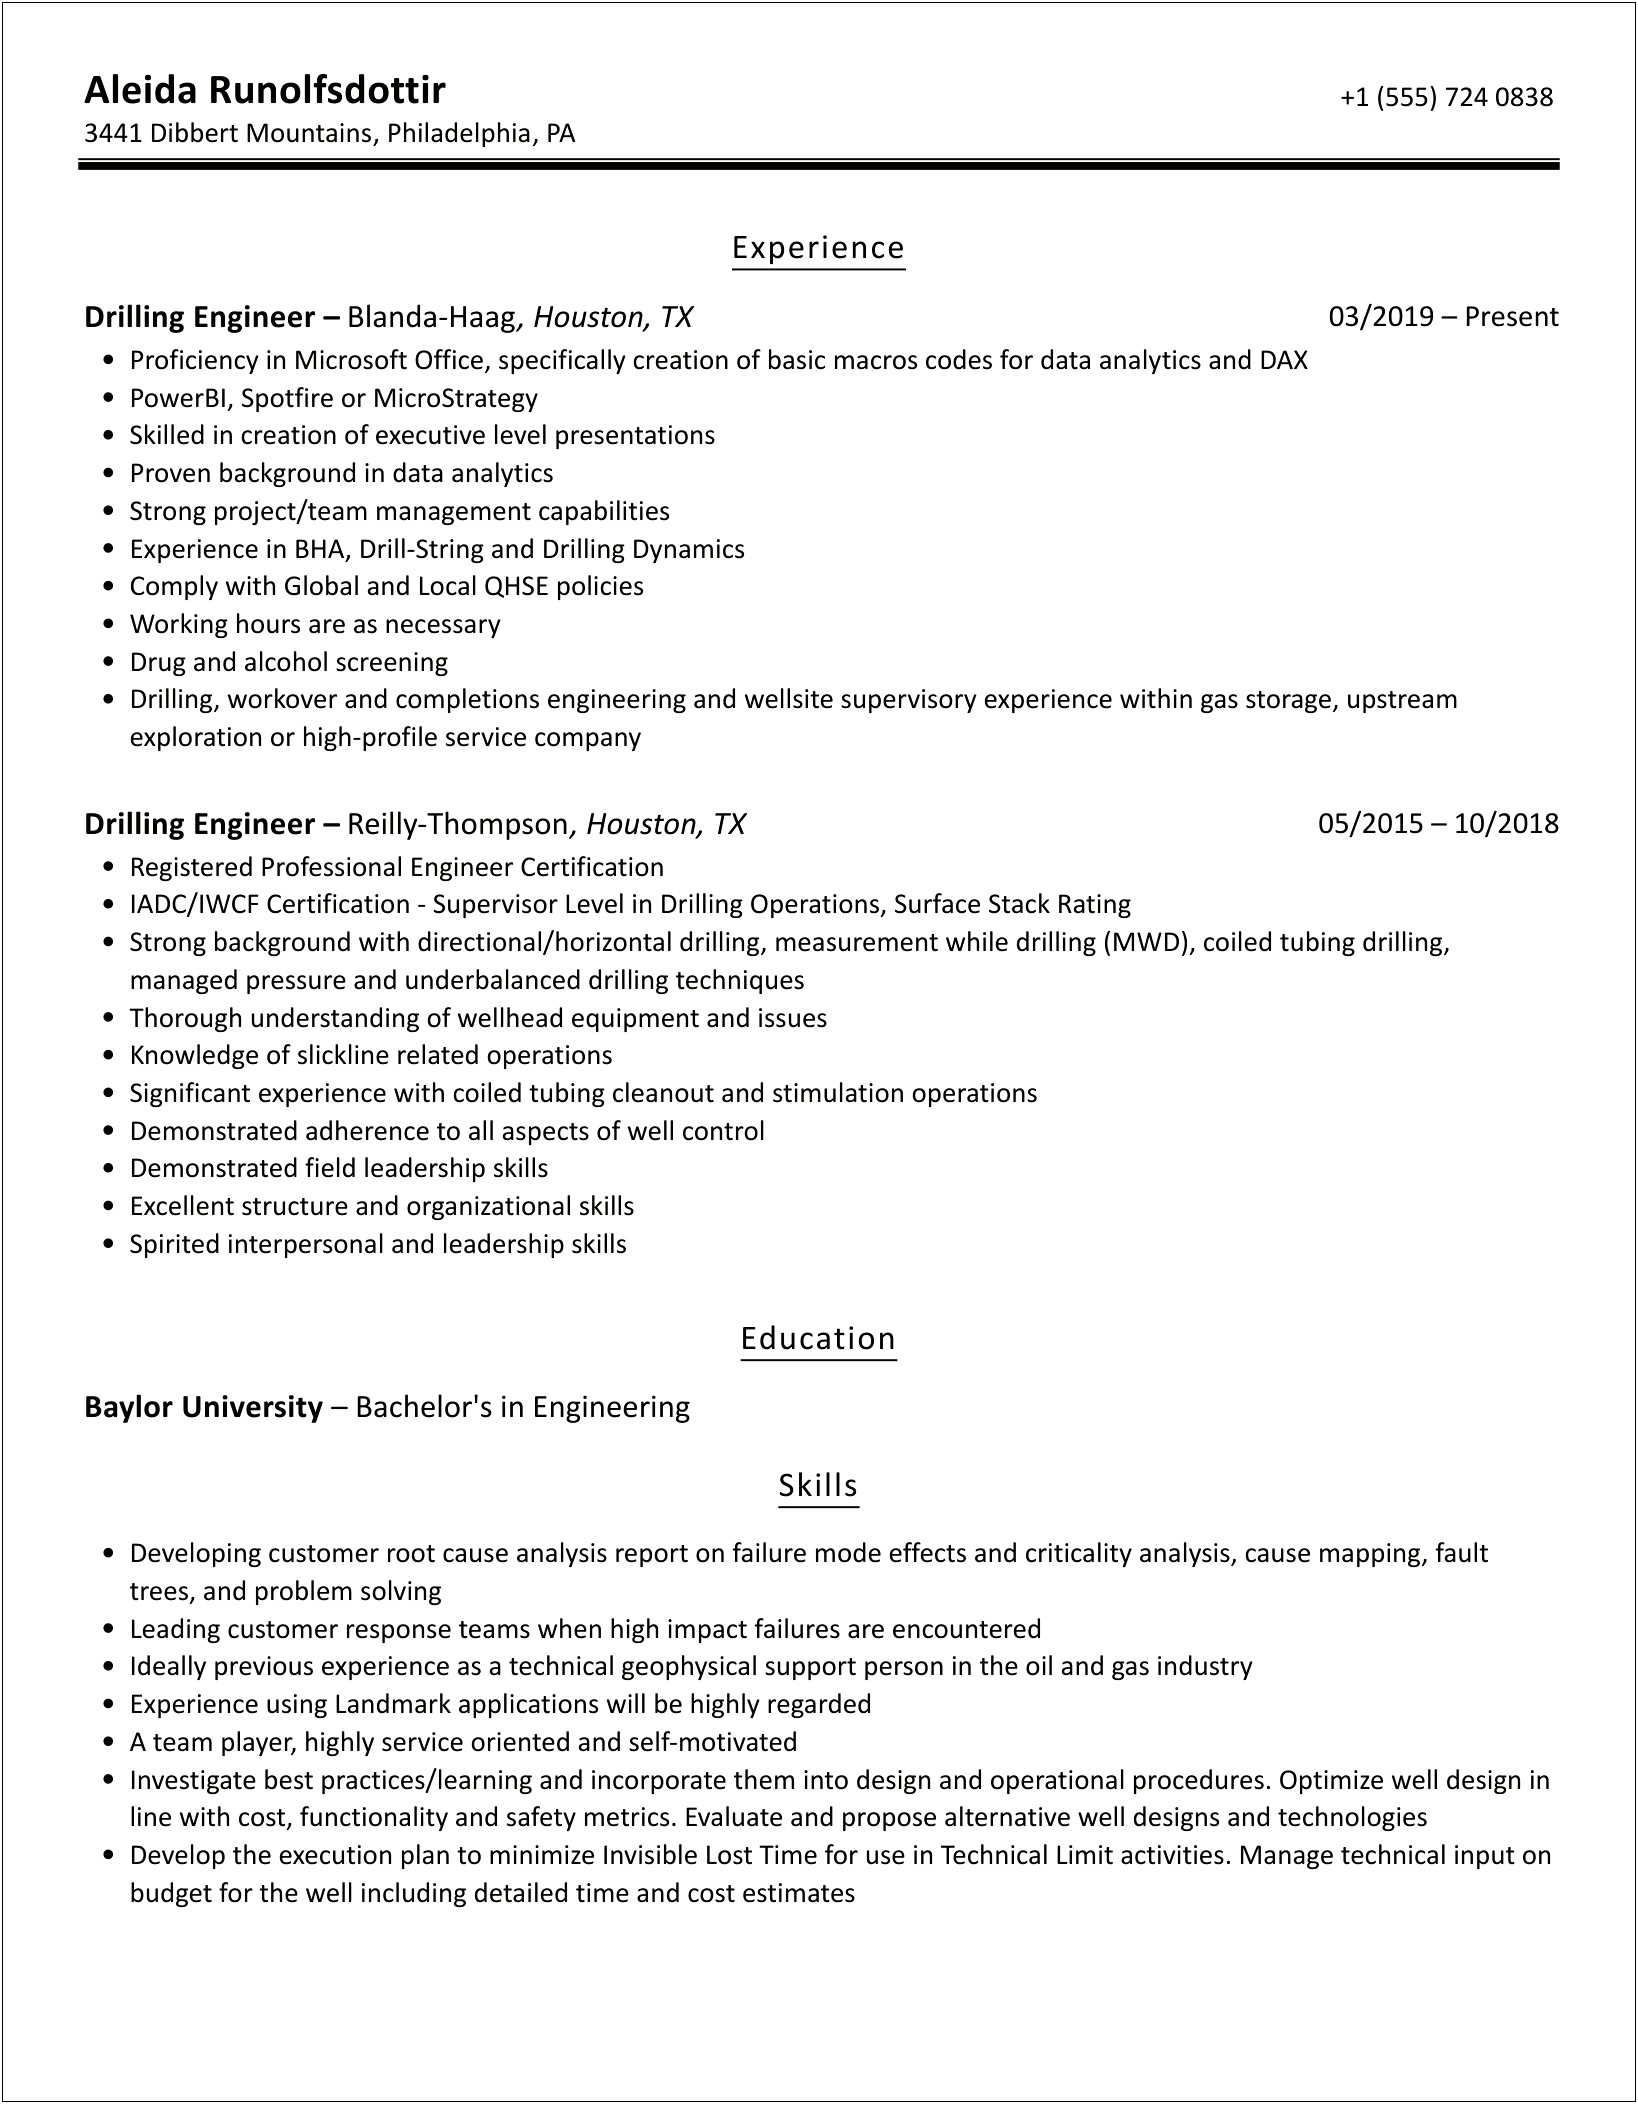 Drilling Fluids Engineer Job Description Resume